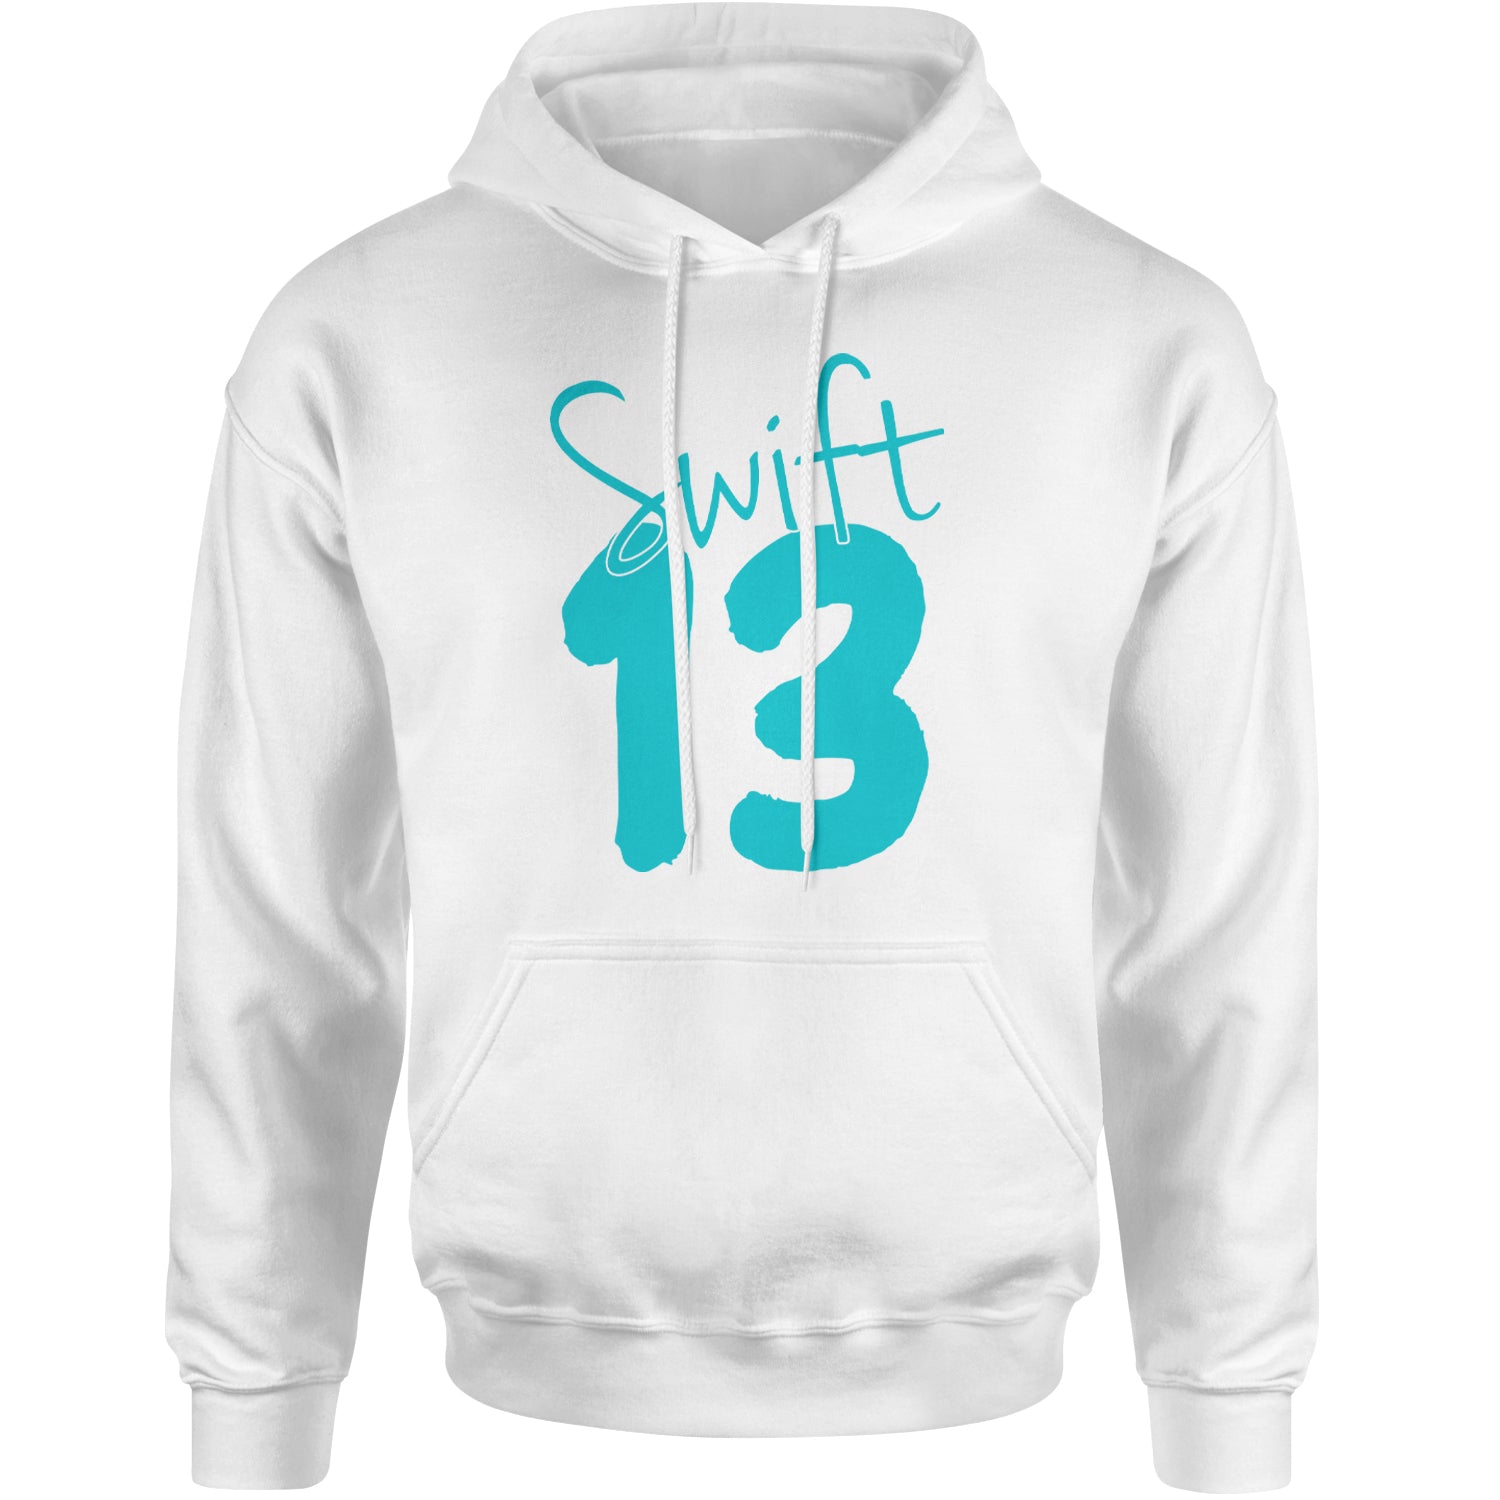 13 Swift 13 Lucky Number Era TTPD Adult Hoodie Sweatshirt White